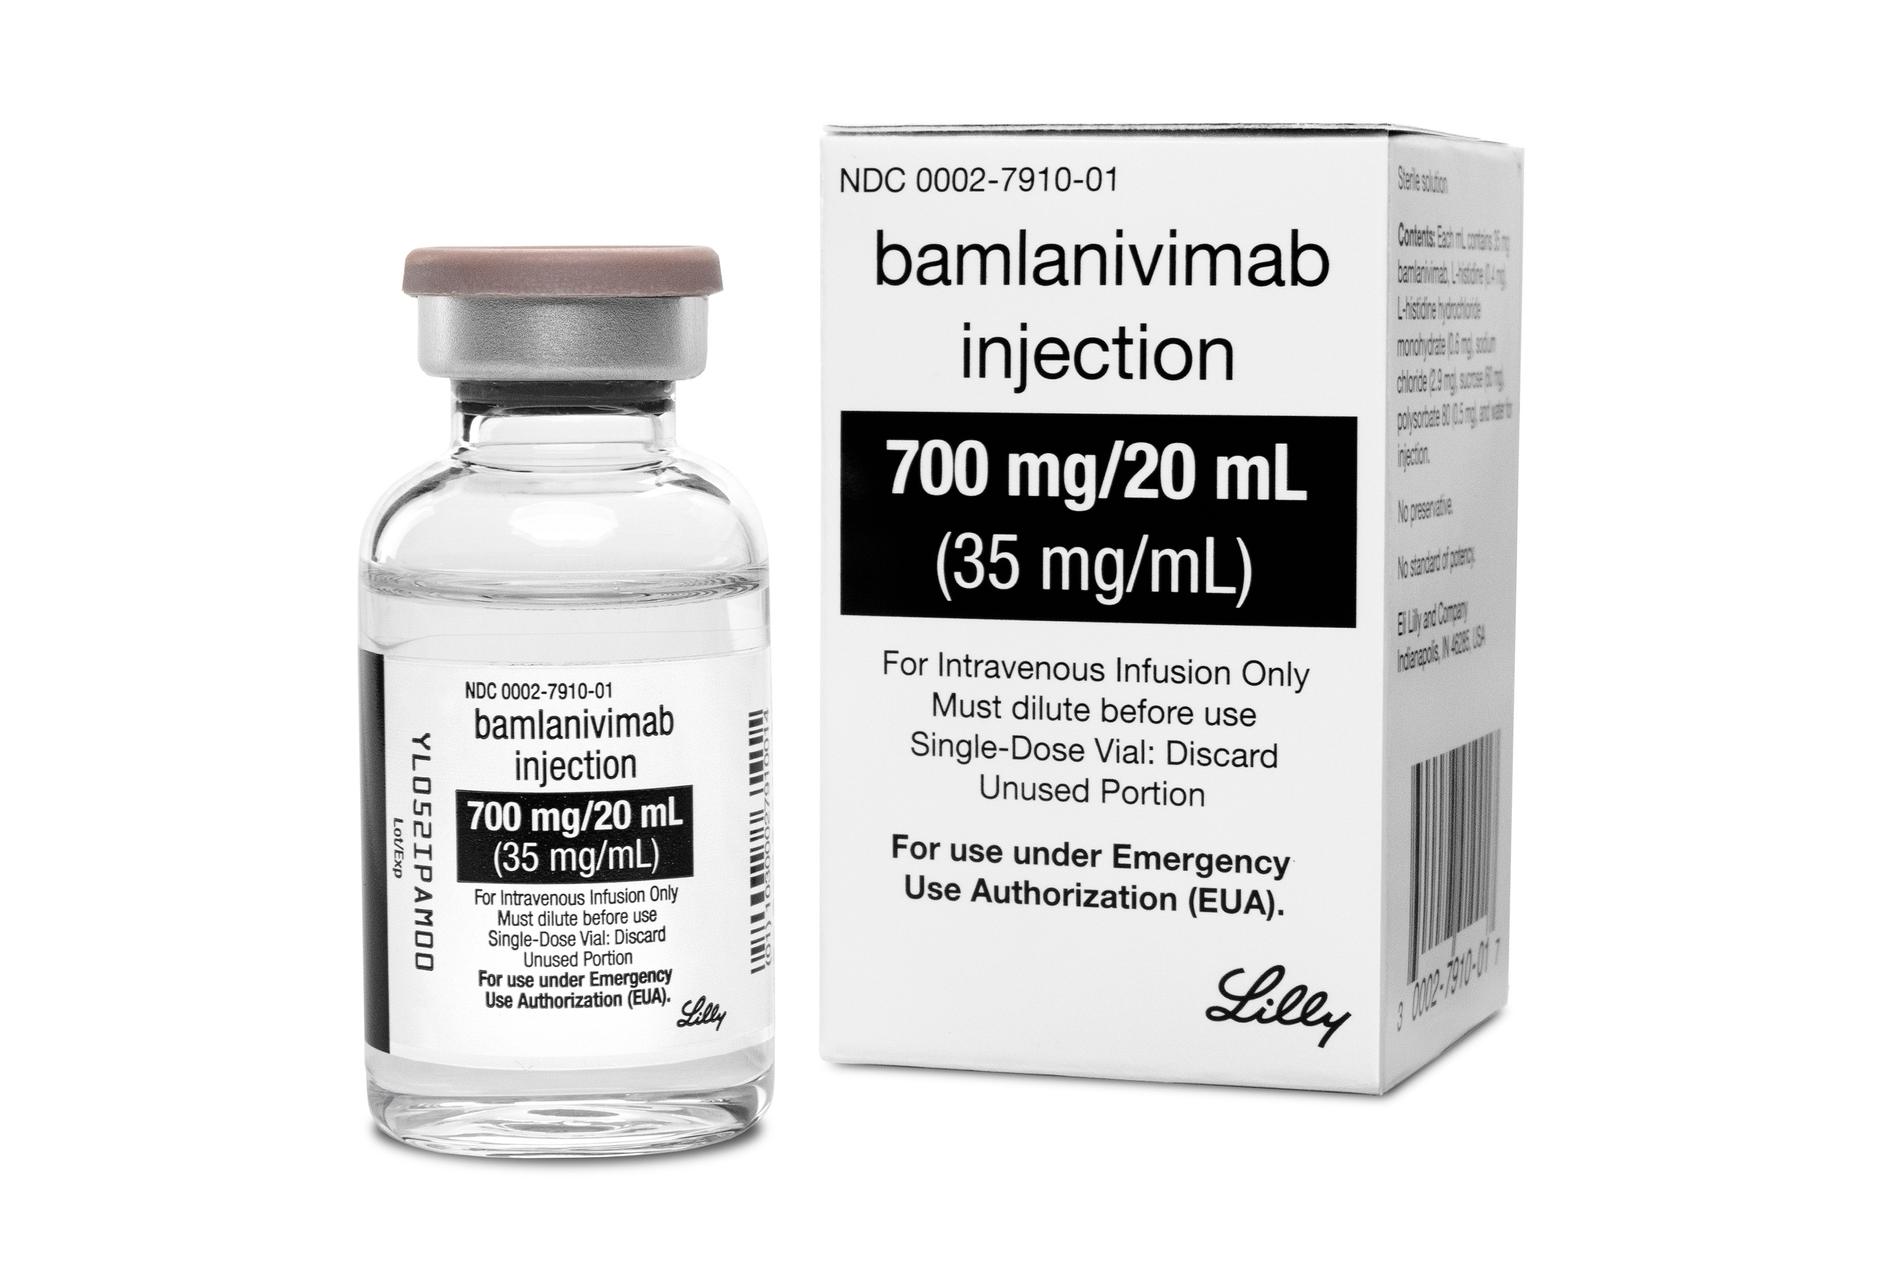 Bamlanivimab har nu getts akut till en patient i Sverige. Arkivbild.